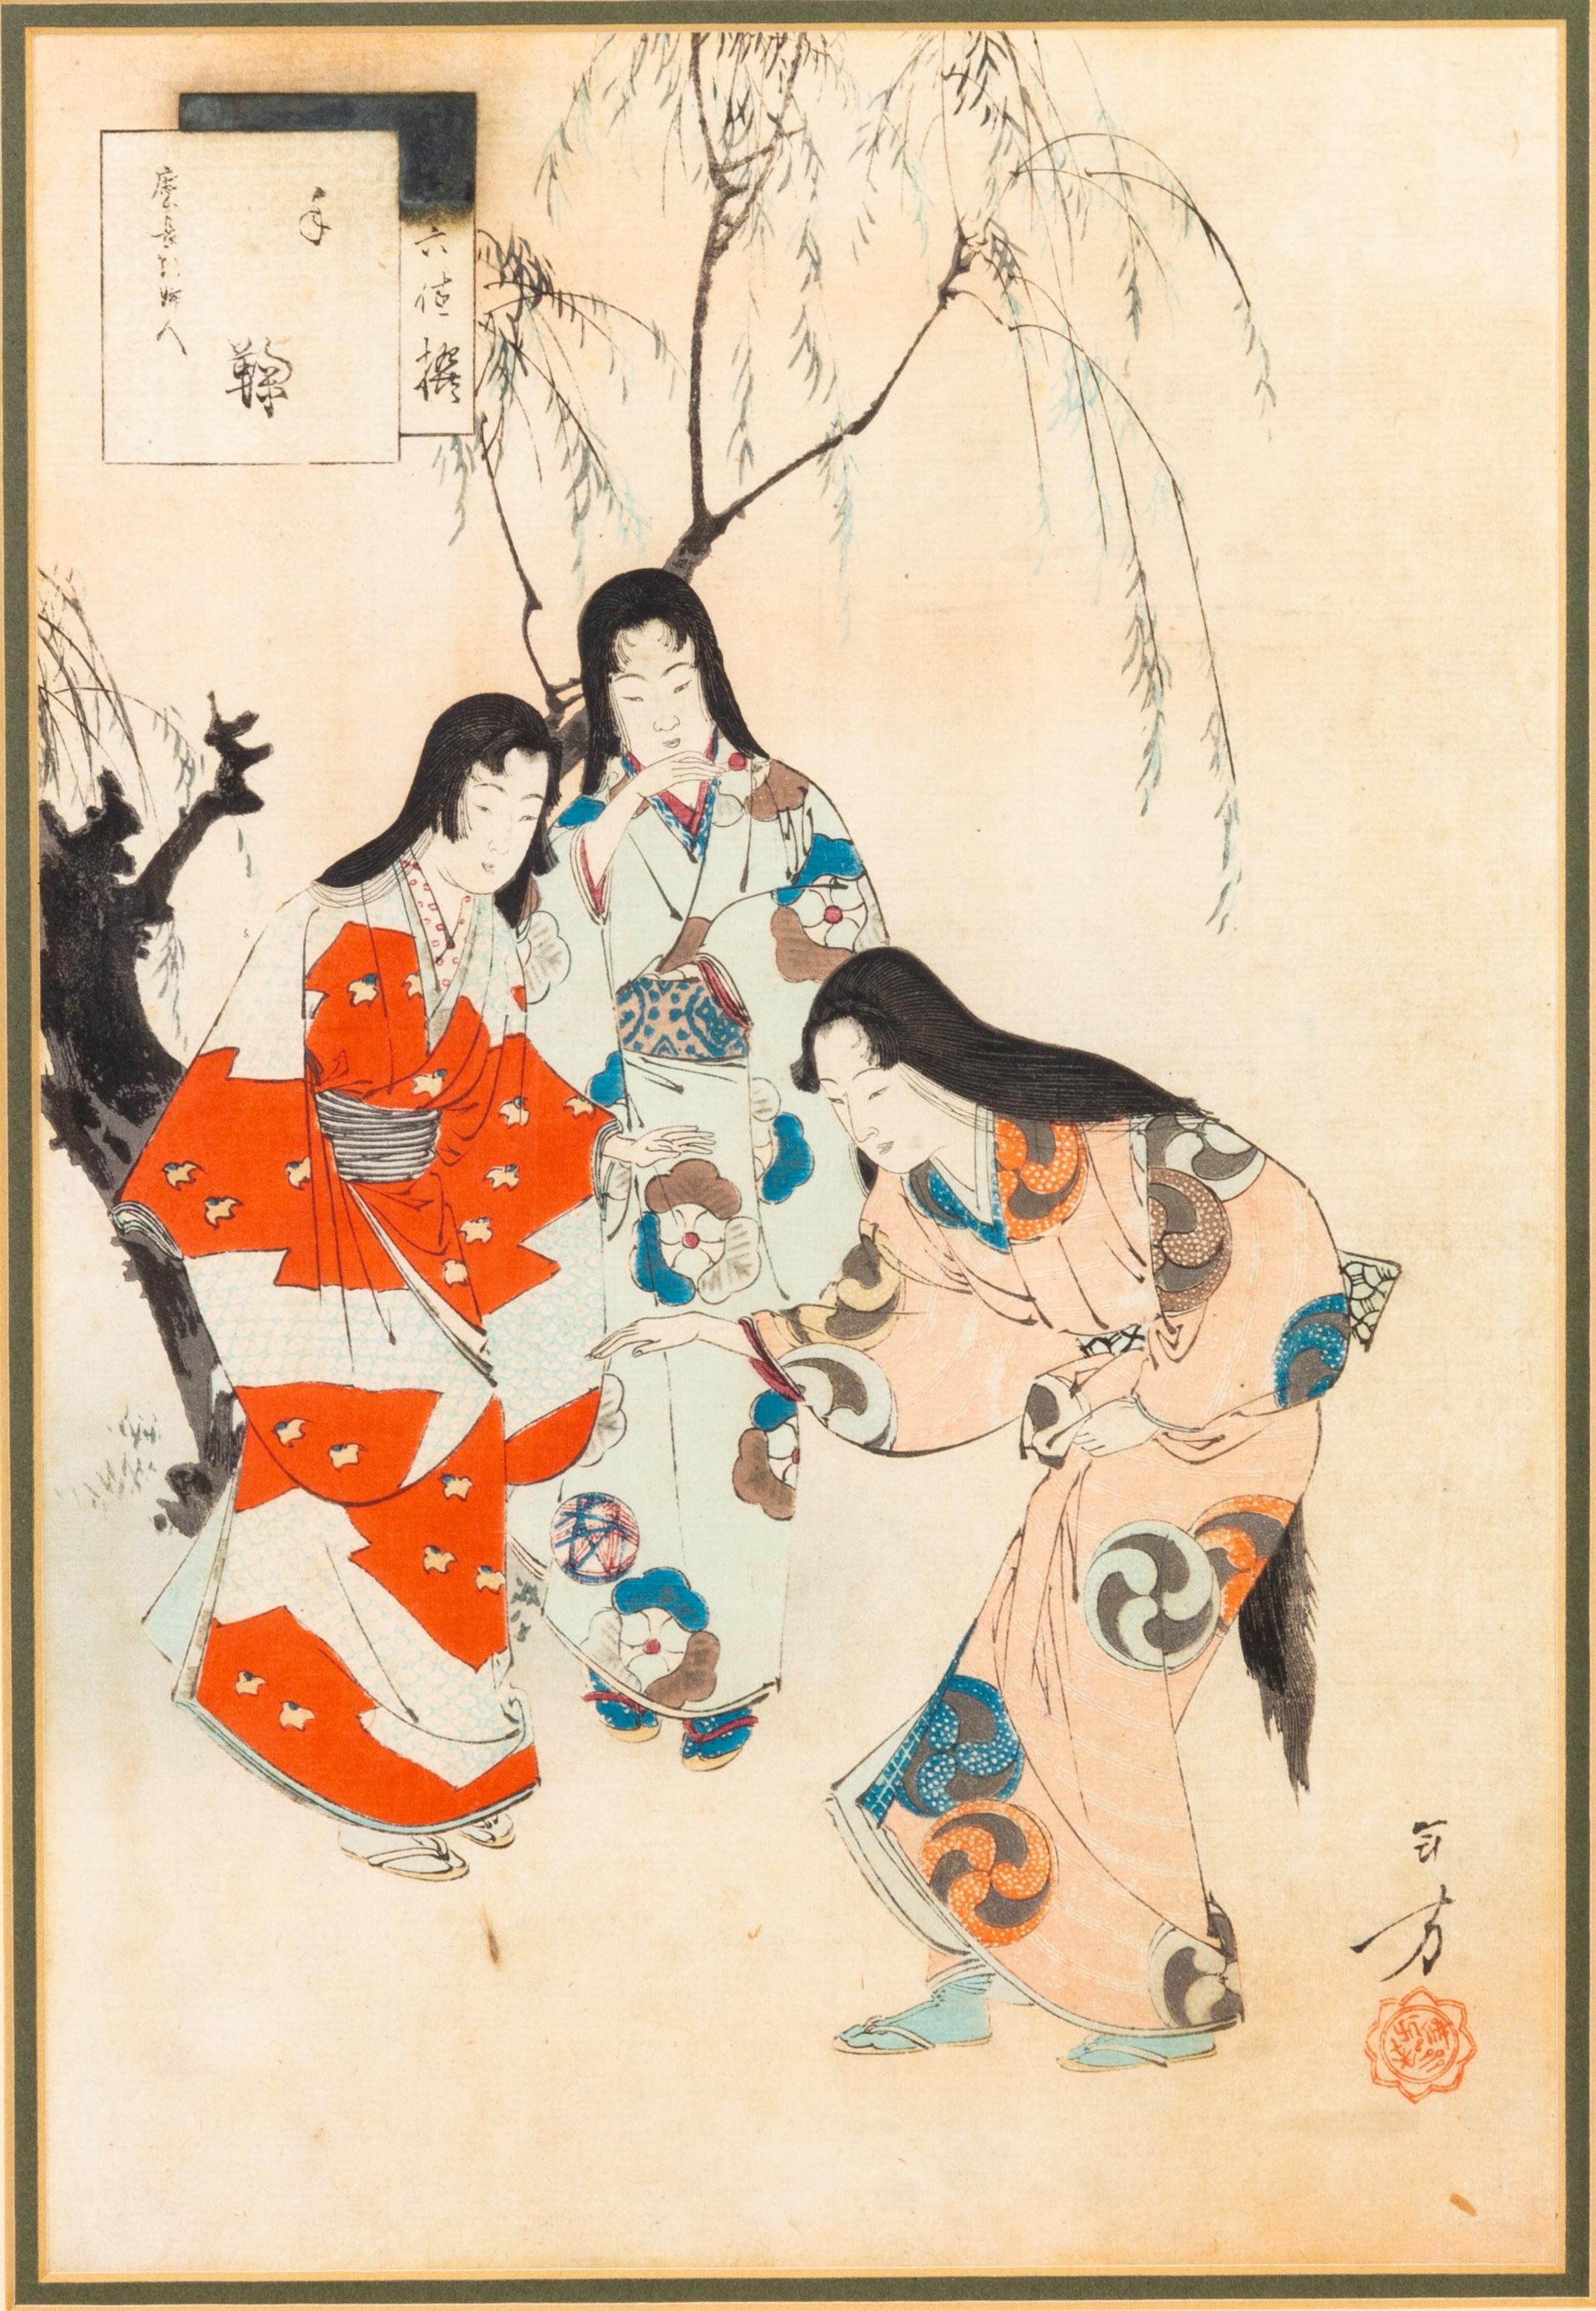 Ogata Gekko (Japanese 1859 - 1920) Woodblock Meiji period Print.
Signed.
Ready to hang.